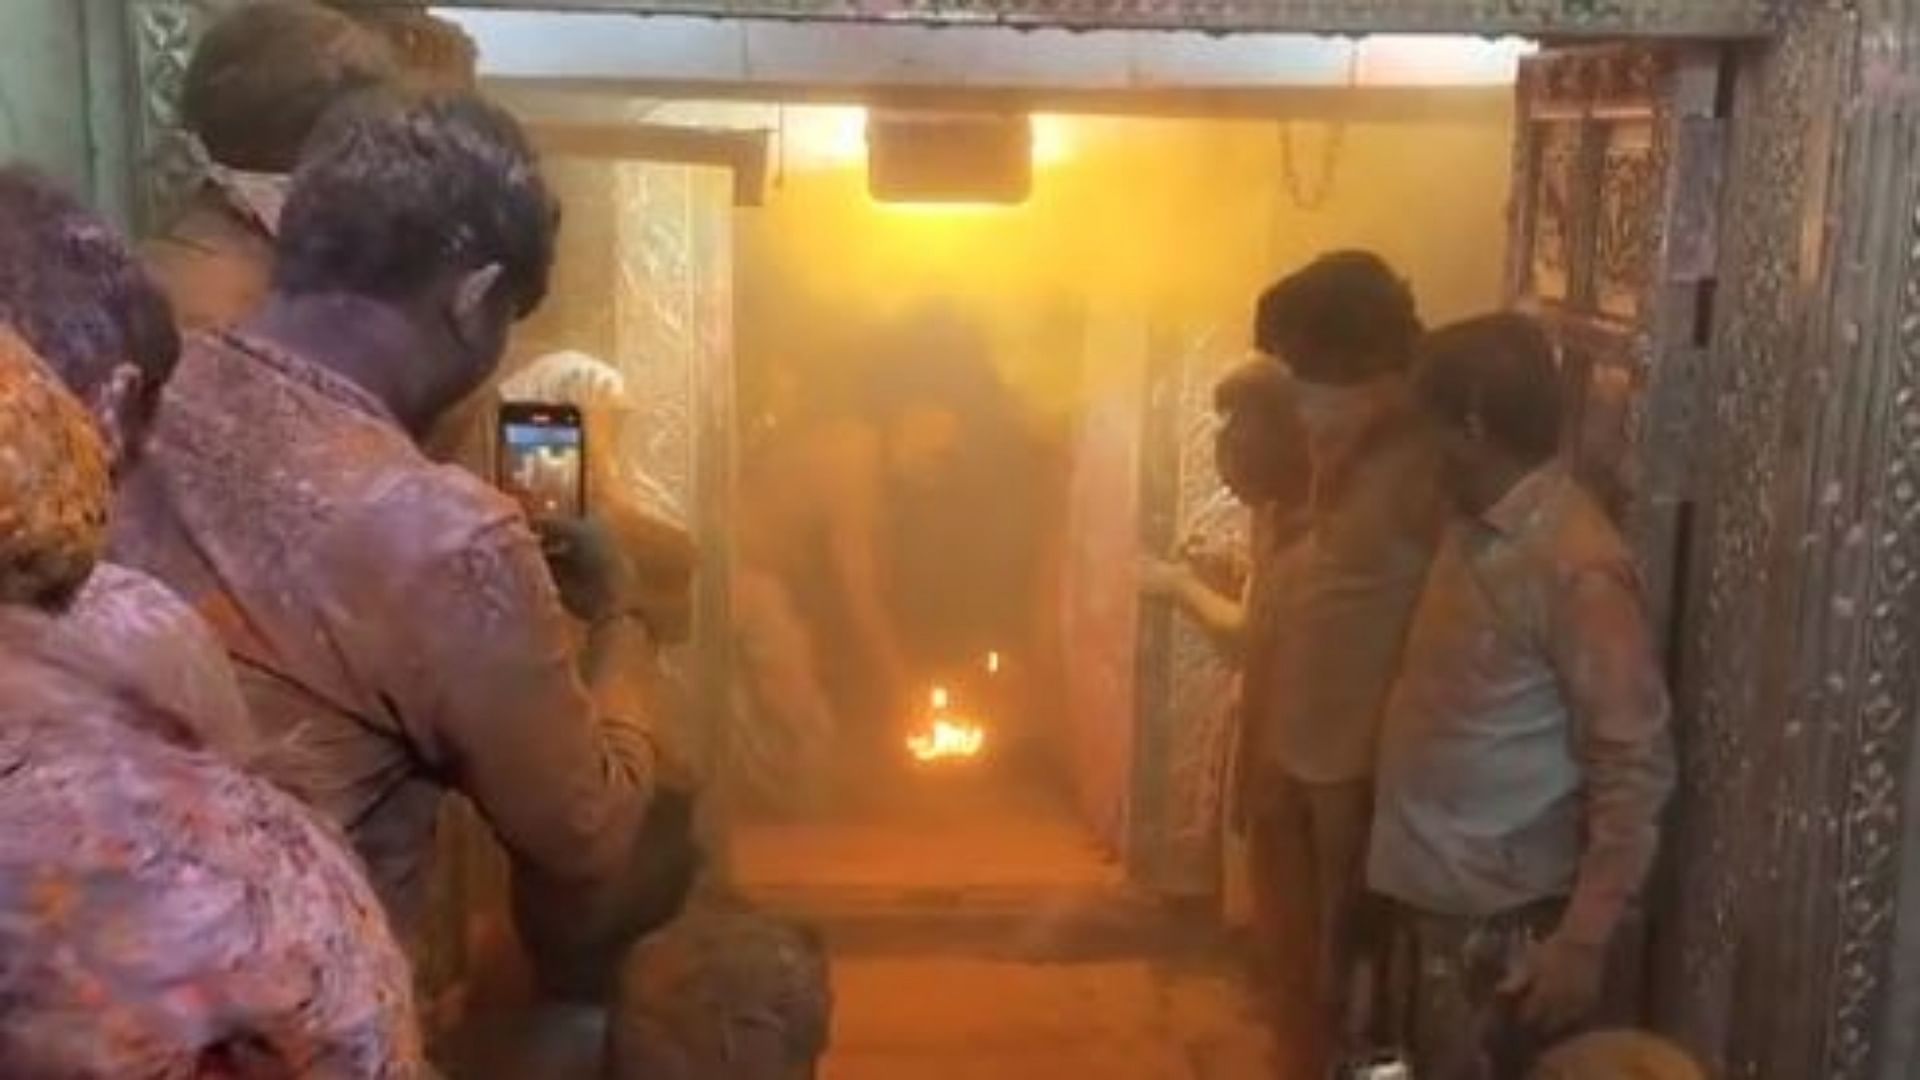 Madhya Pradesh Ujjain Mahakal Temple How Fire Incident Happened See Video News And Updates - Amar Ujala Hindi News Live - Mahakal Temple Fire:उज्जैन के महाकाल मंदिर में भस्मआरती के दौरान कब